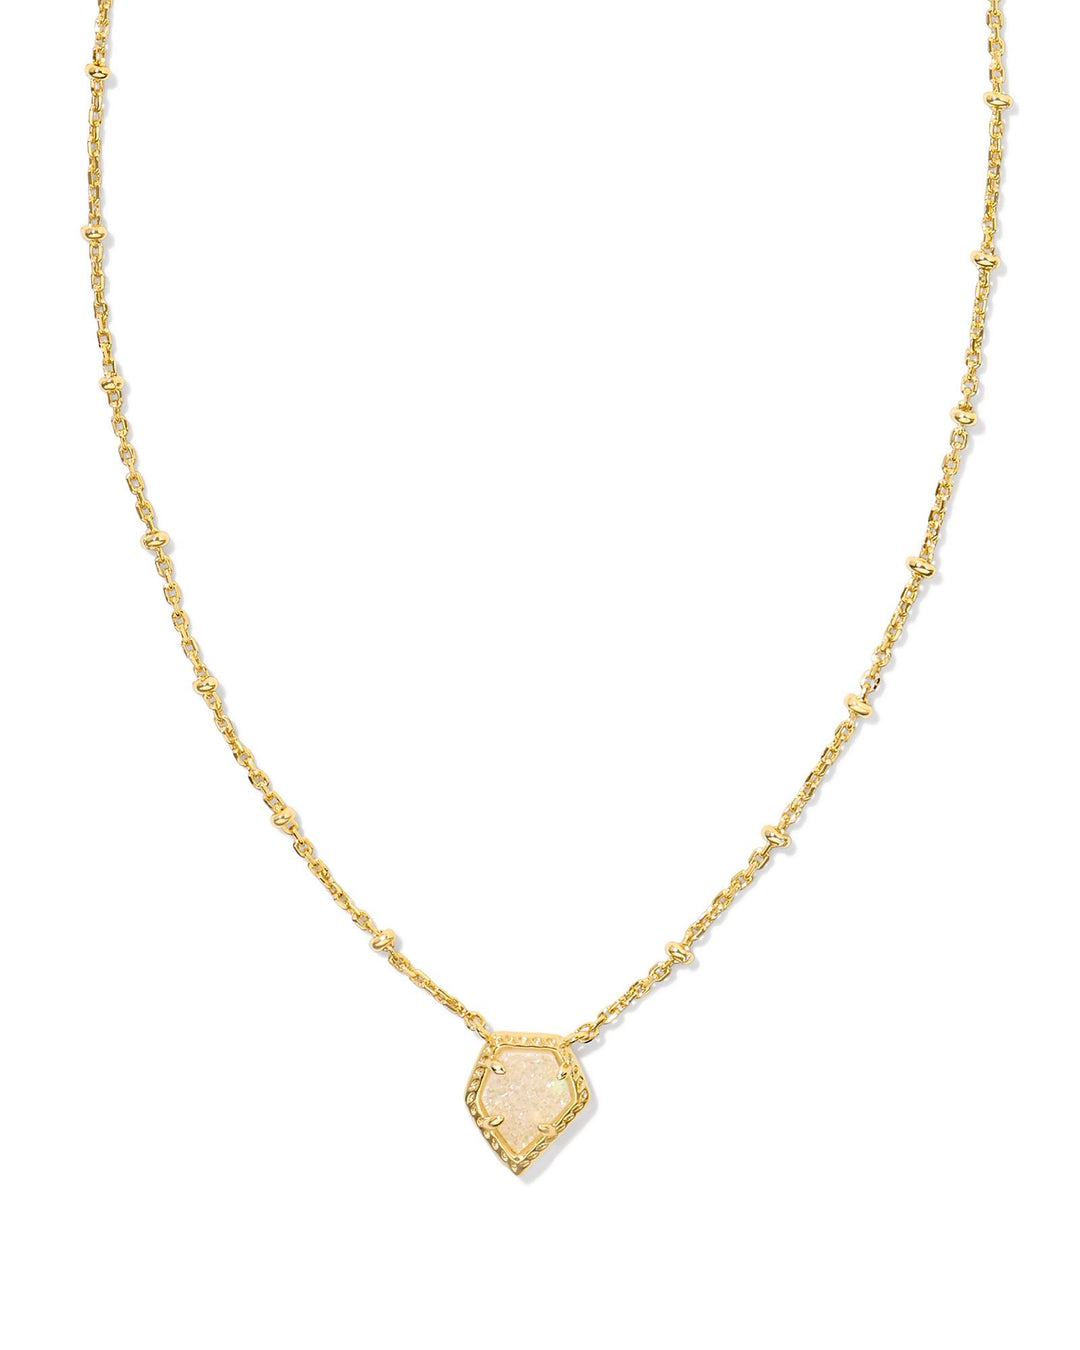 Kendra Scott Tess Satellite Pendant Necklace in Iridescent Drusy